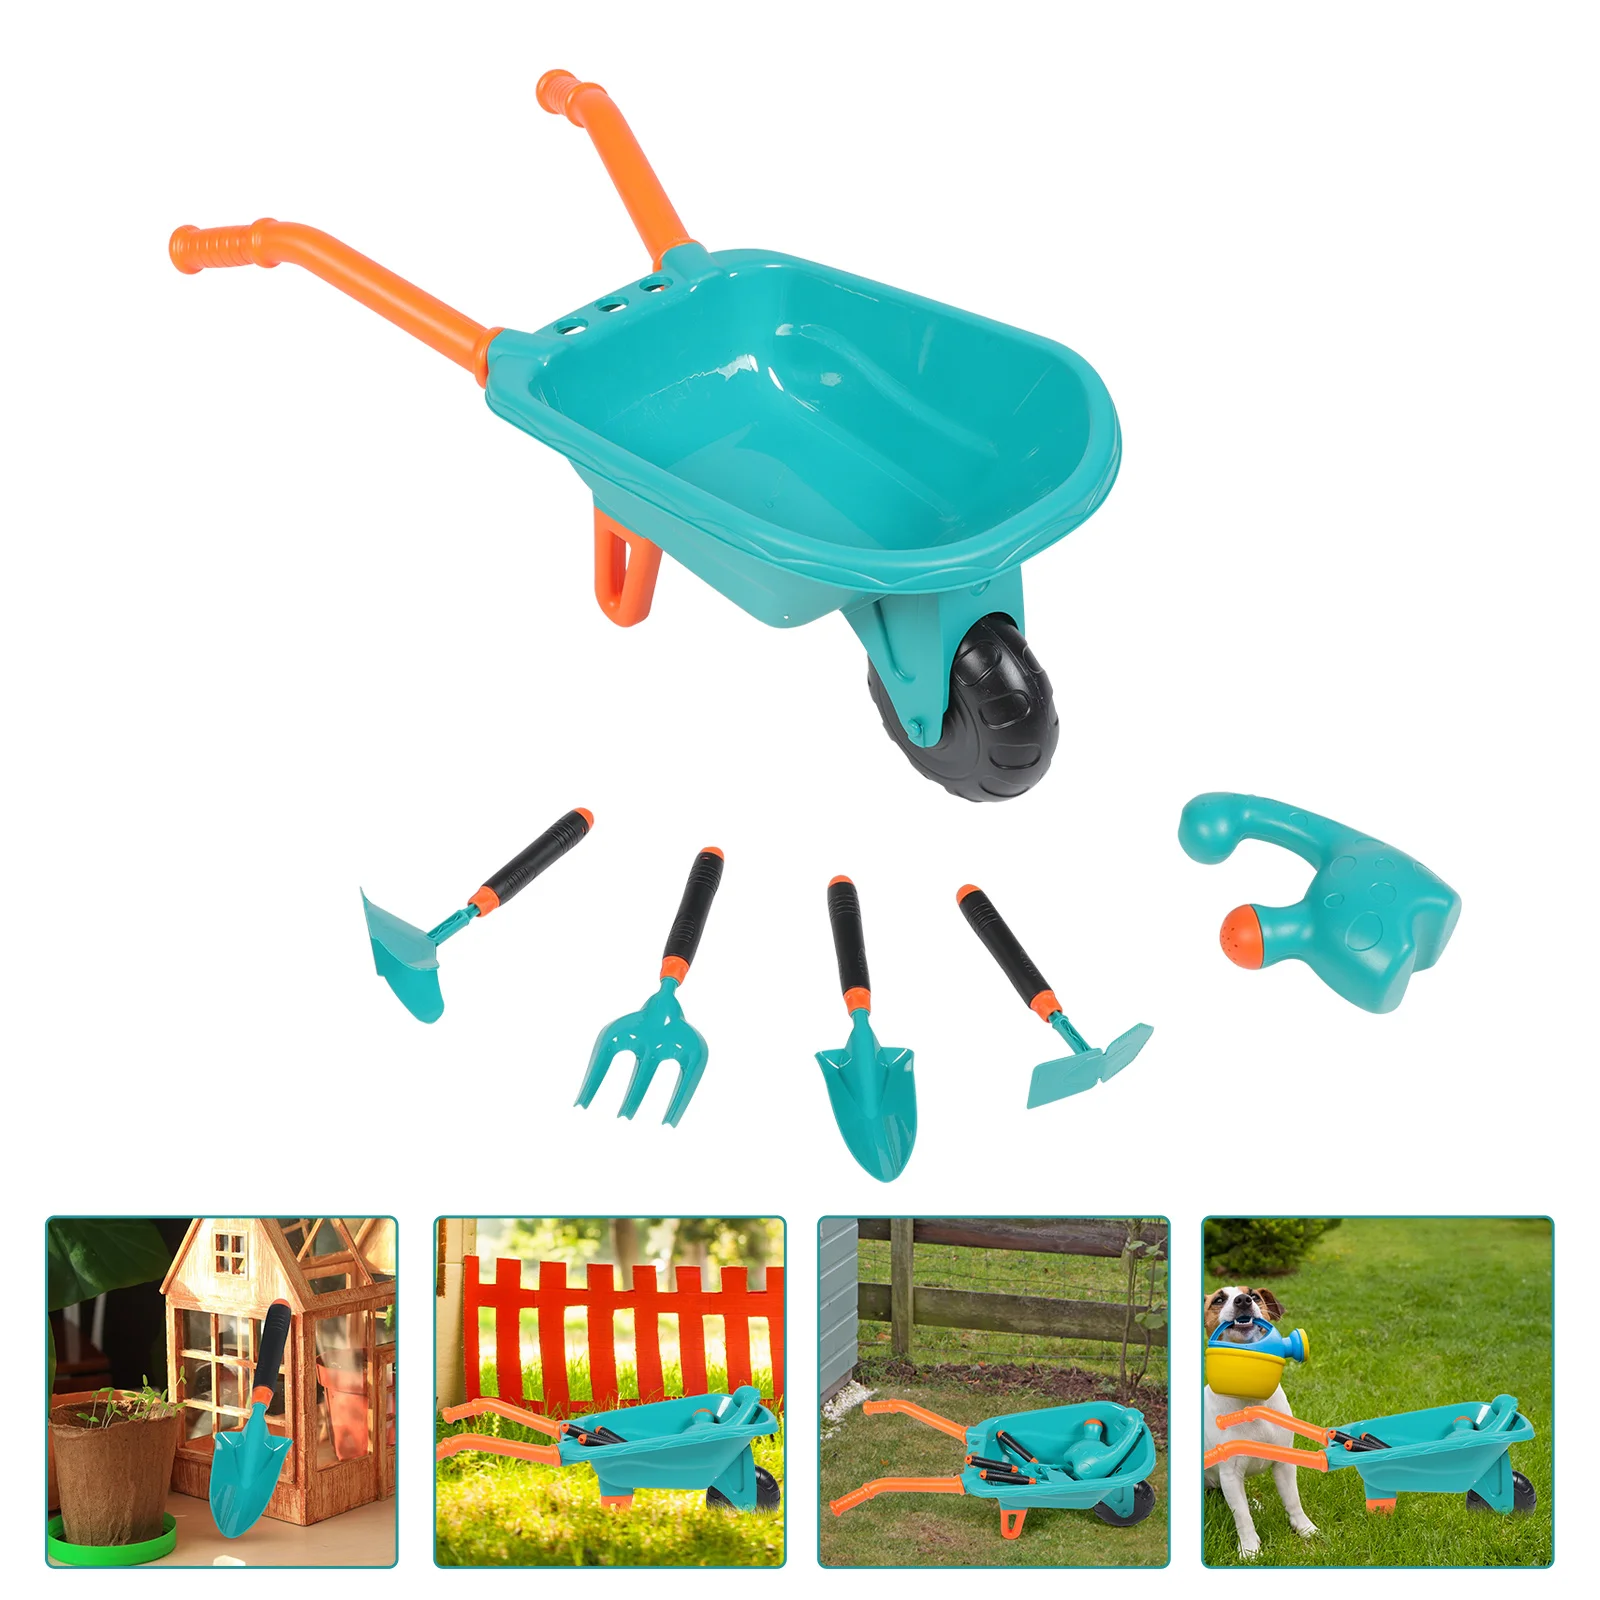 

Outdoor Toddler Playsets Kids Watering Can Sand Playing Set Playhouse Wheelbarrow Gardening Tool Toy Mini Gardening Shovels